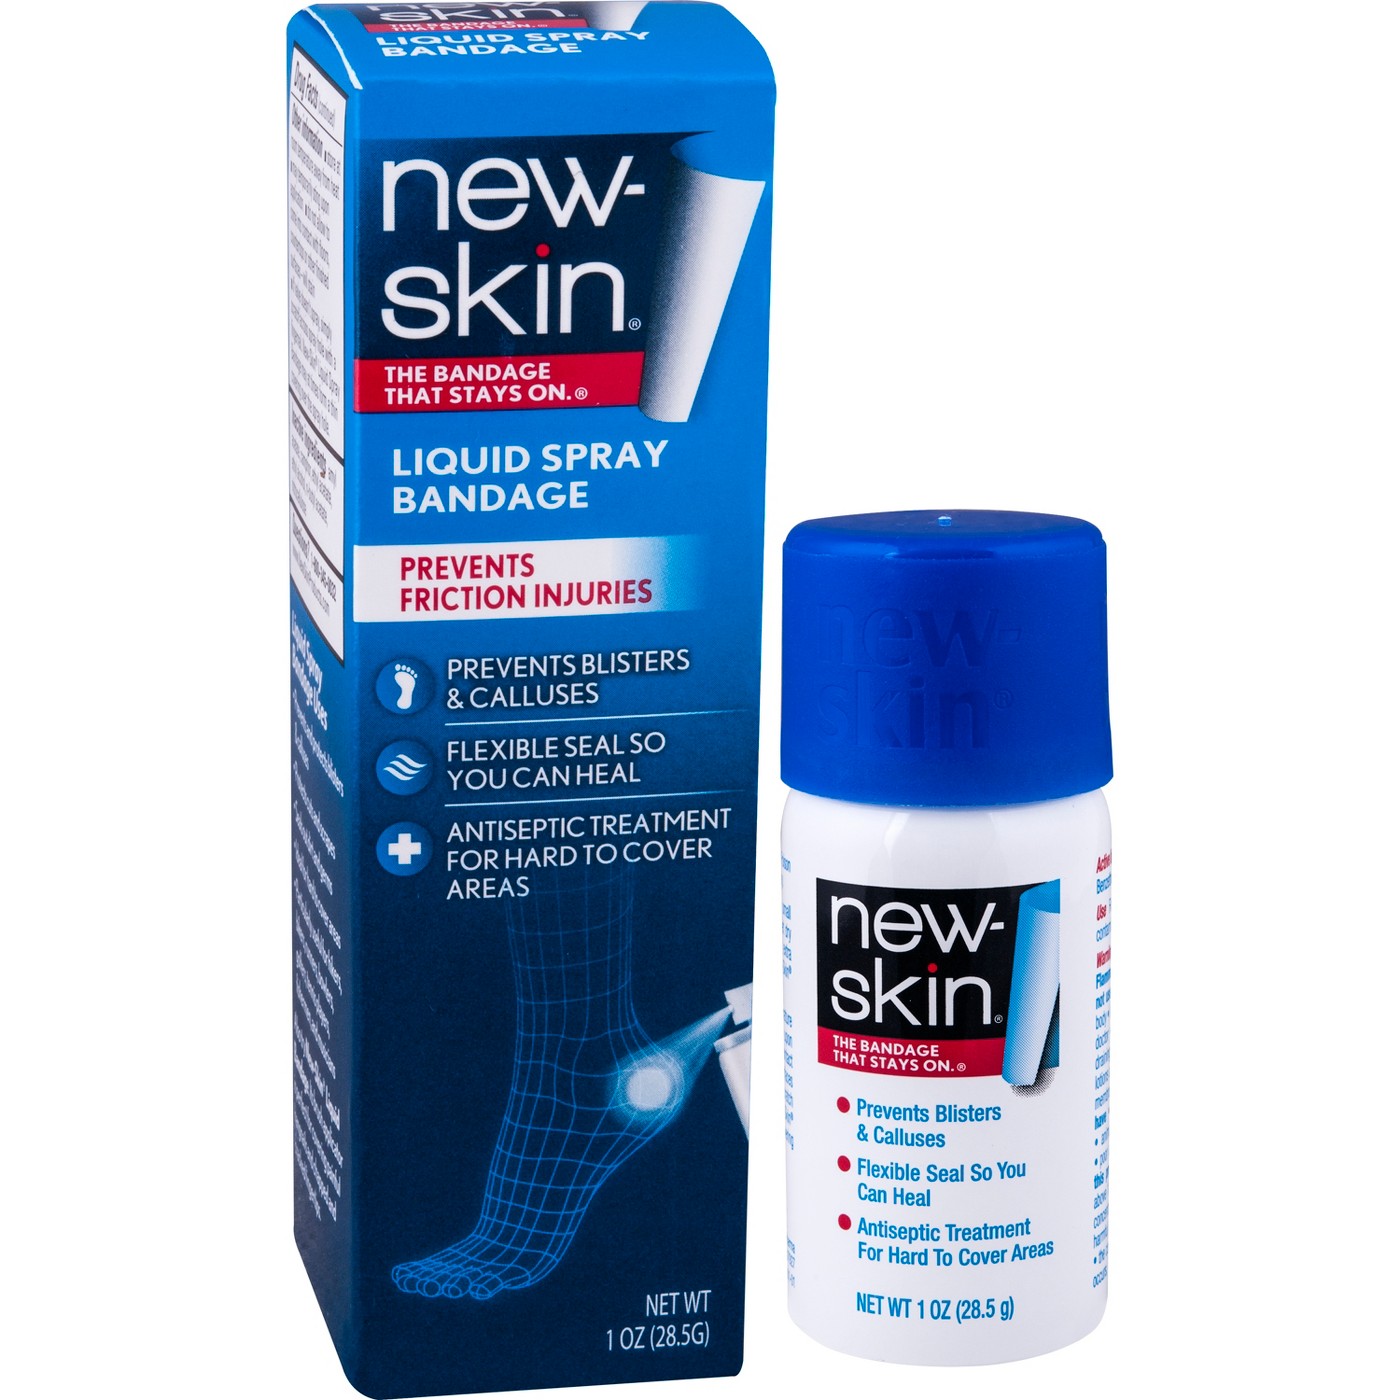 new skin liquid bandage in shower